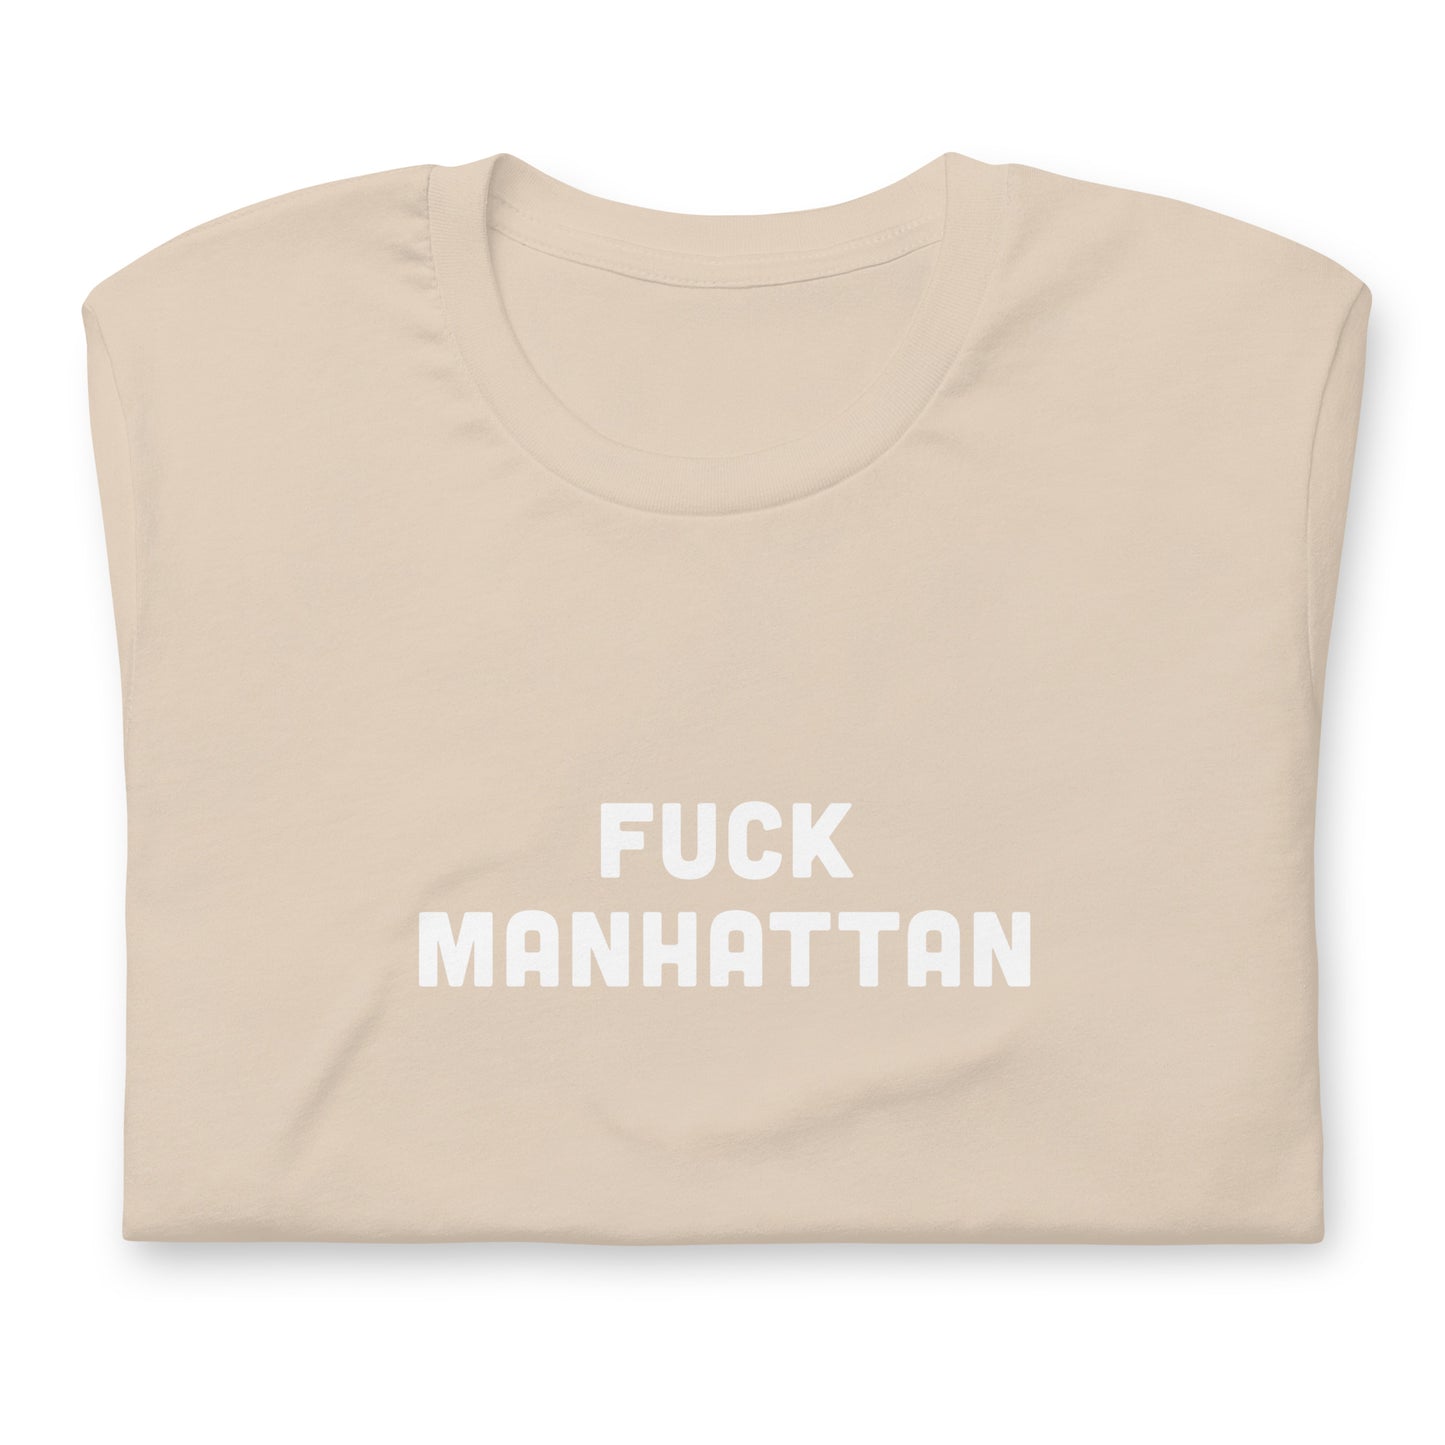 Fuck Manhattan T-Shirt Size XL Color Asphalt